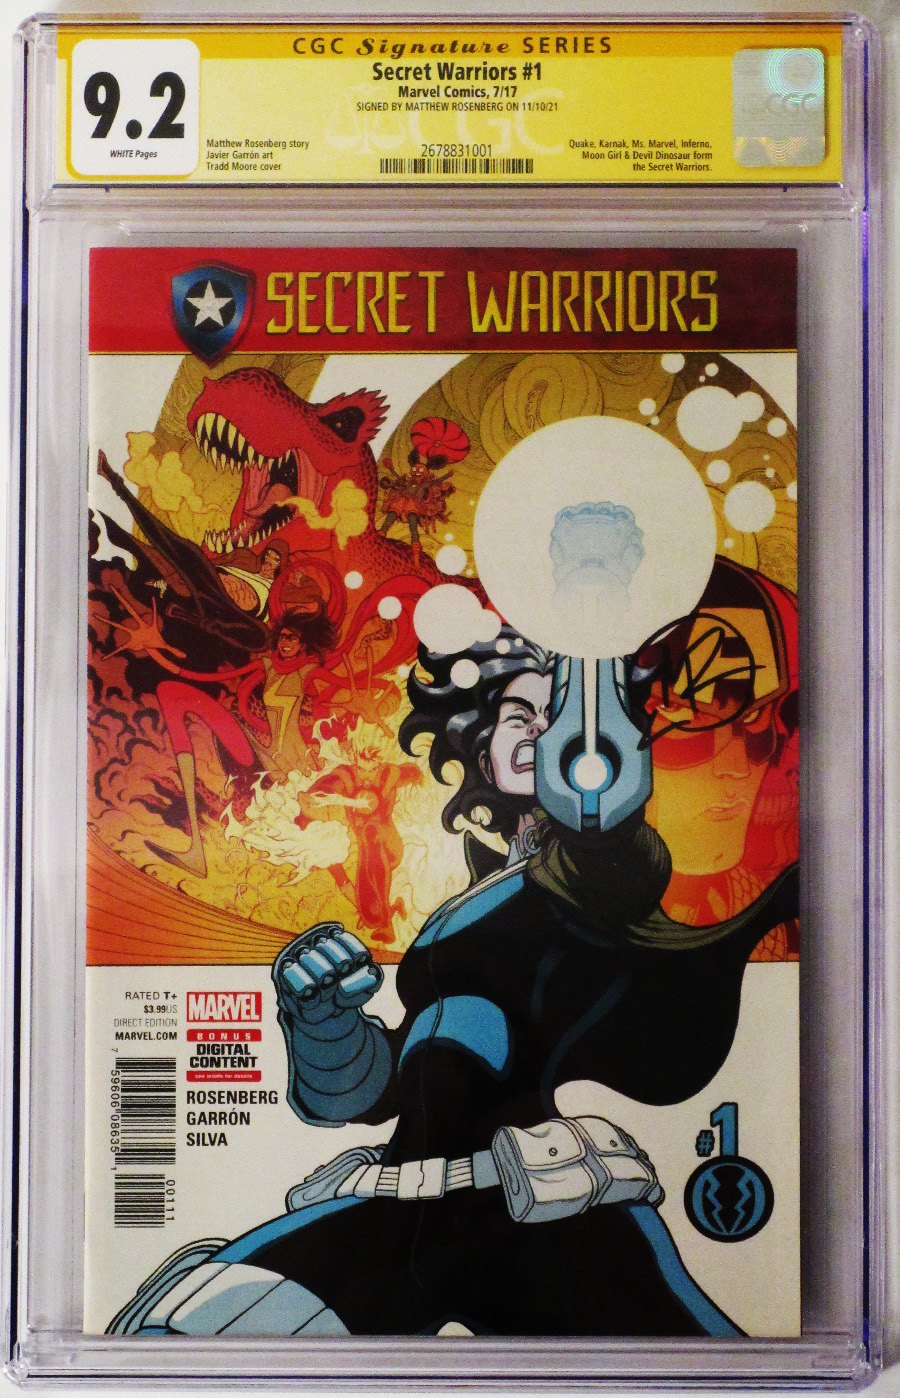 Secret Warriors Vol 2 #1 Cover G Regular Tradd Moore Cover Signed By Matthew Rosenberg CGC 9.2